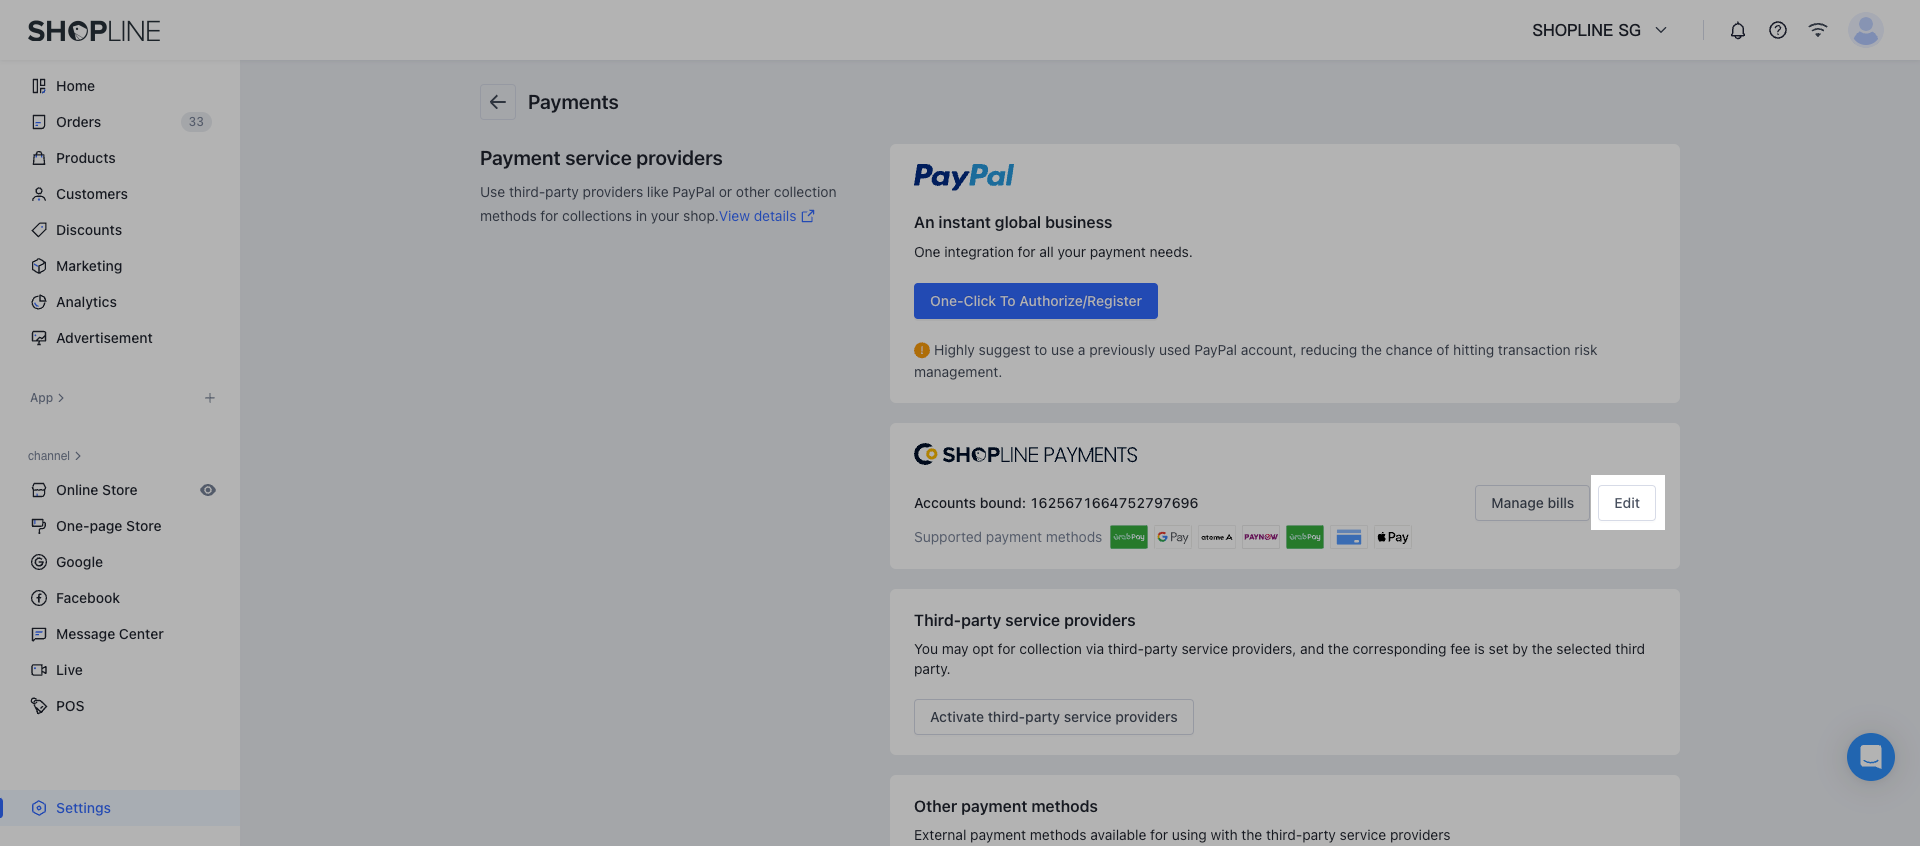 SHOPLINE Payments - GooglePay - 3.png